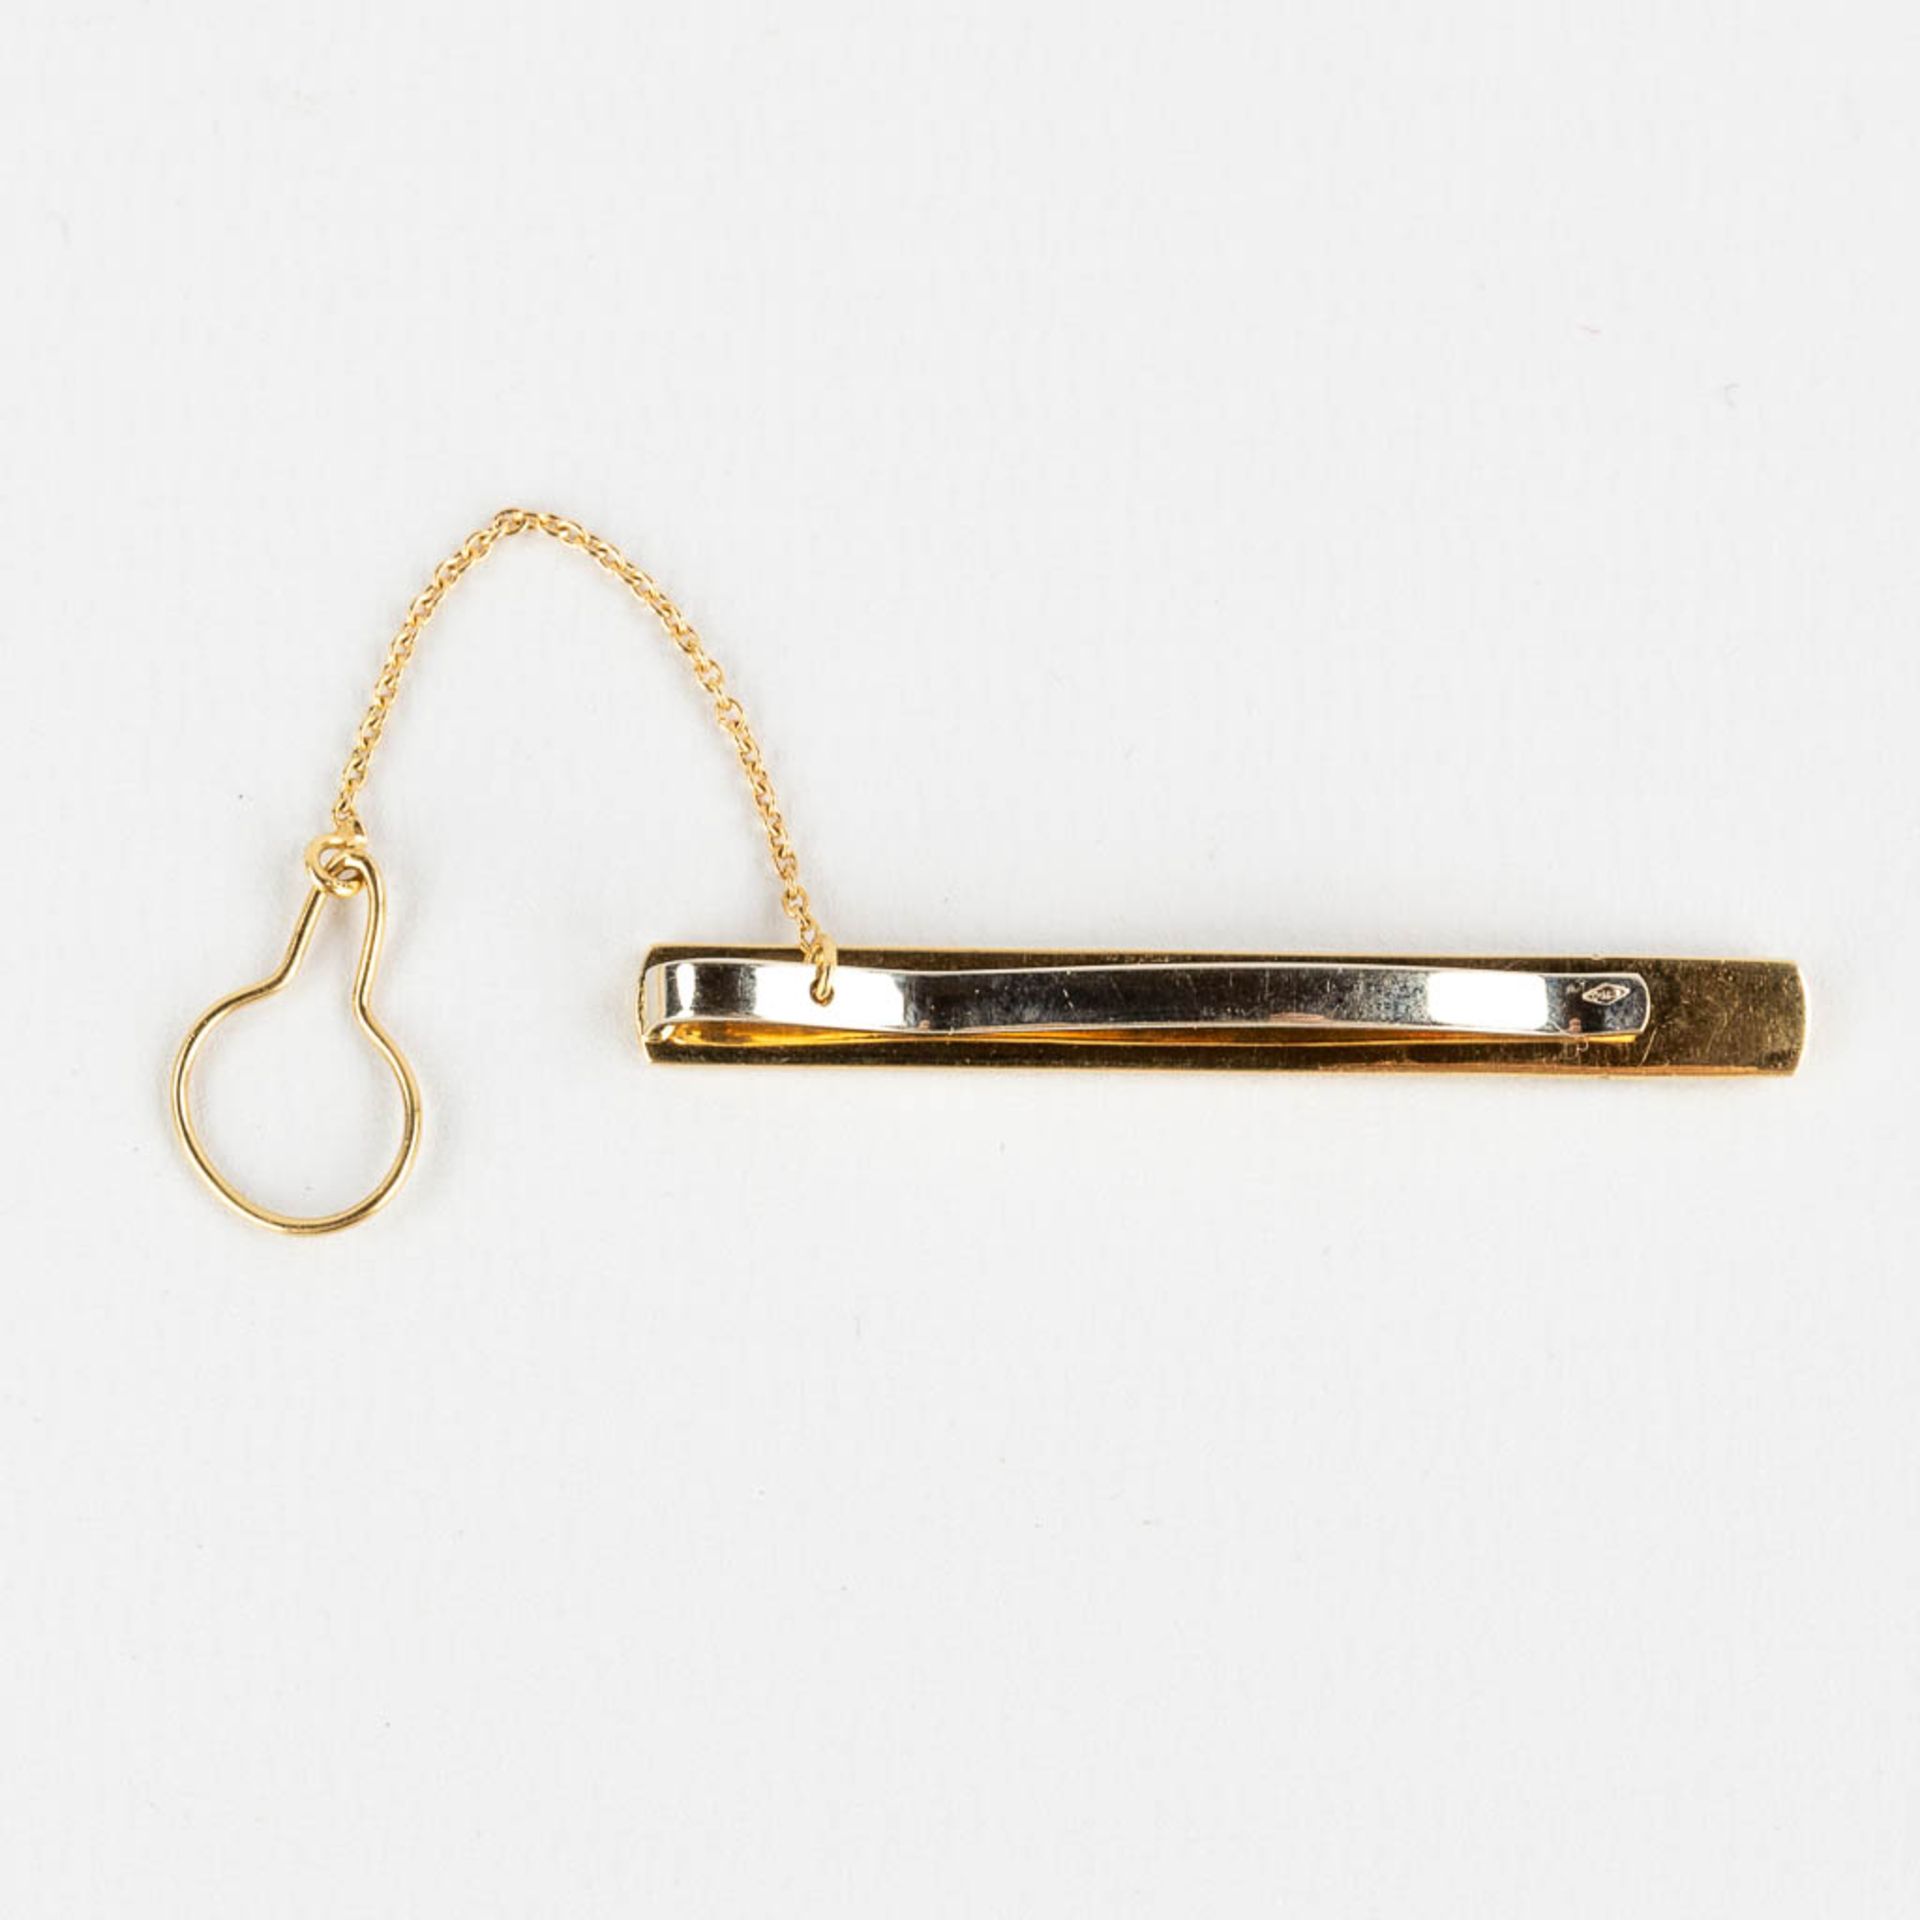 A tie clip, 18kt gold, 8,28g. (W:5,5 cm) - Image 4 of 7